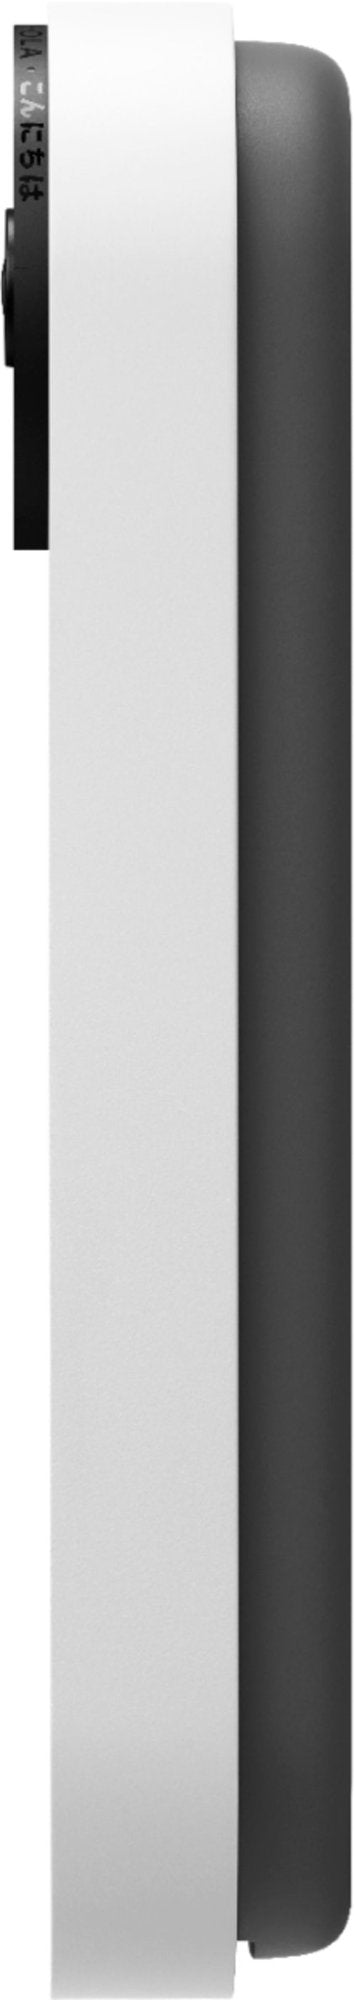 Nest Doorbell (Battery) Smart Wi-Fi Video Doorbell Camera - Linen (New)